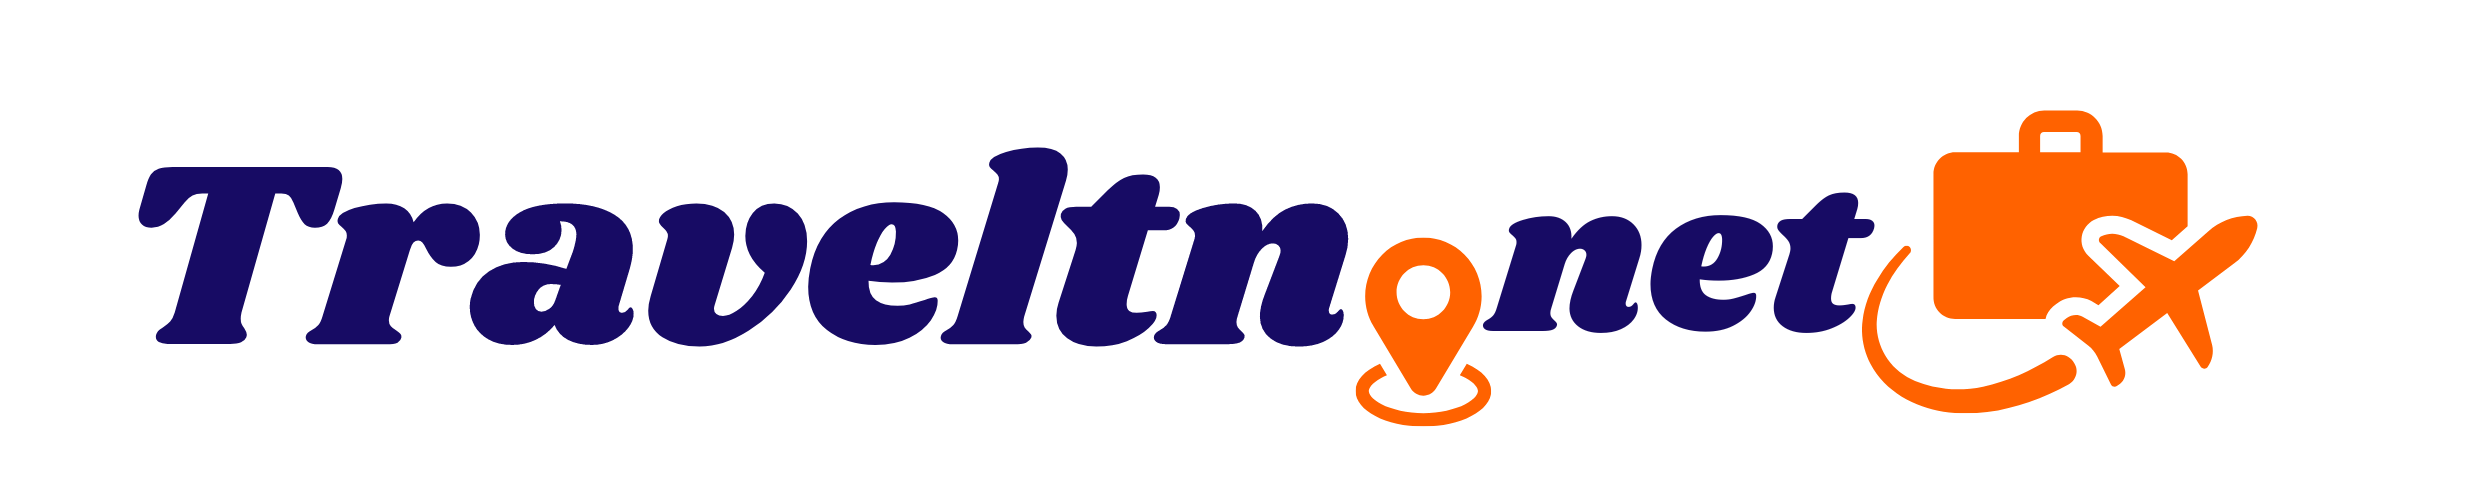 traveltn.net logo